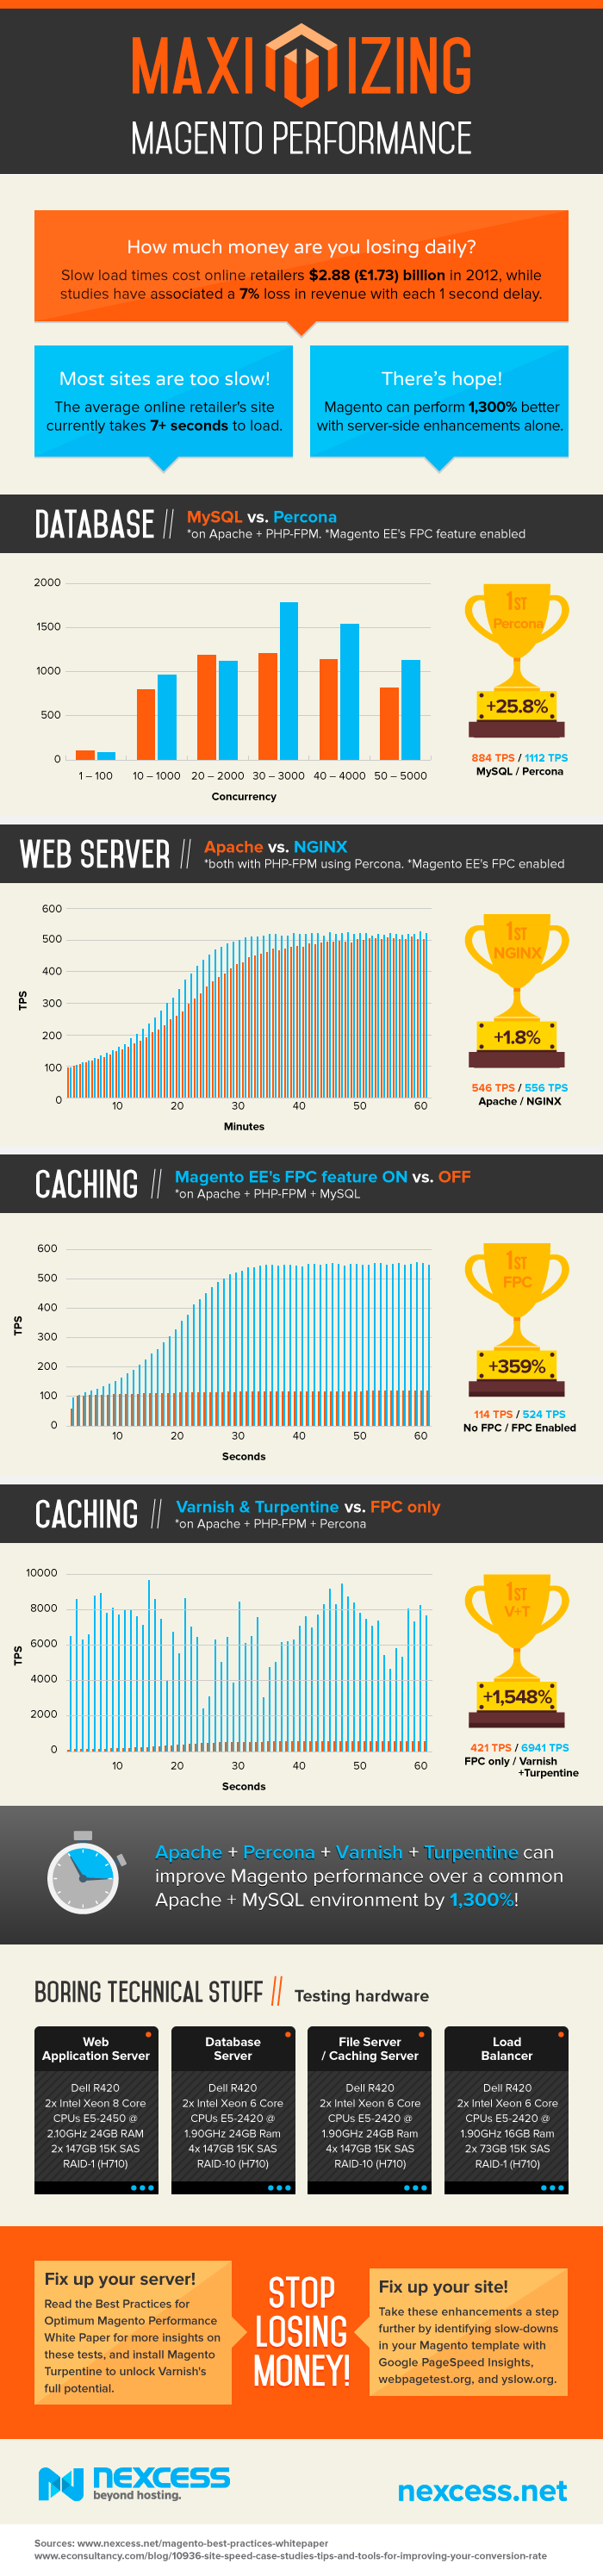 Magento performance infographic